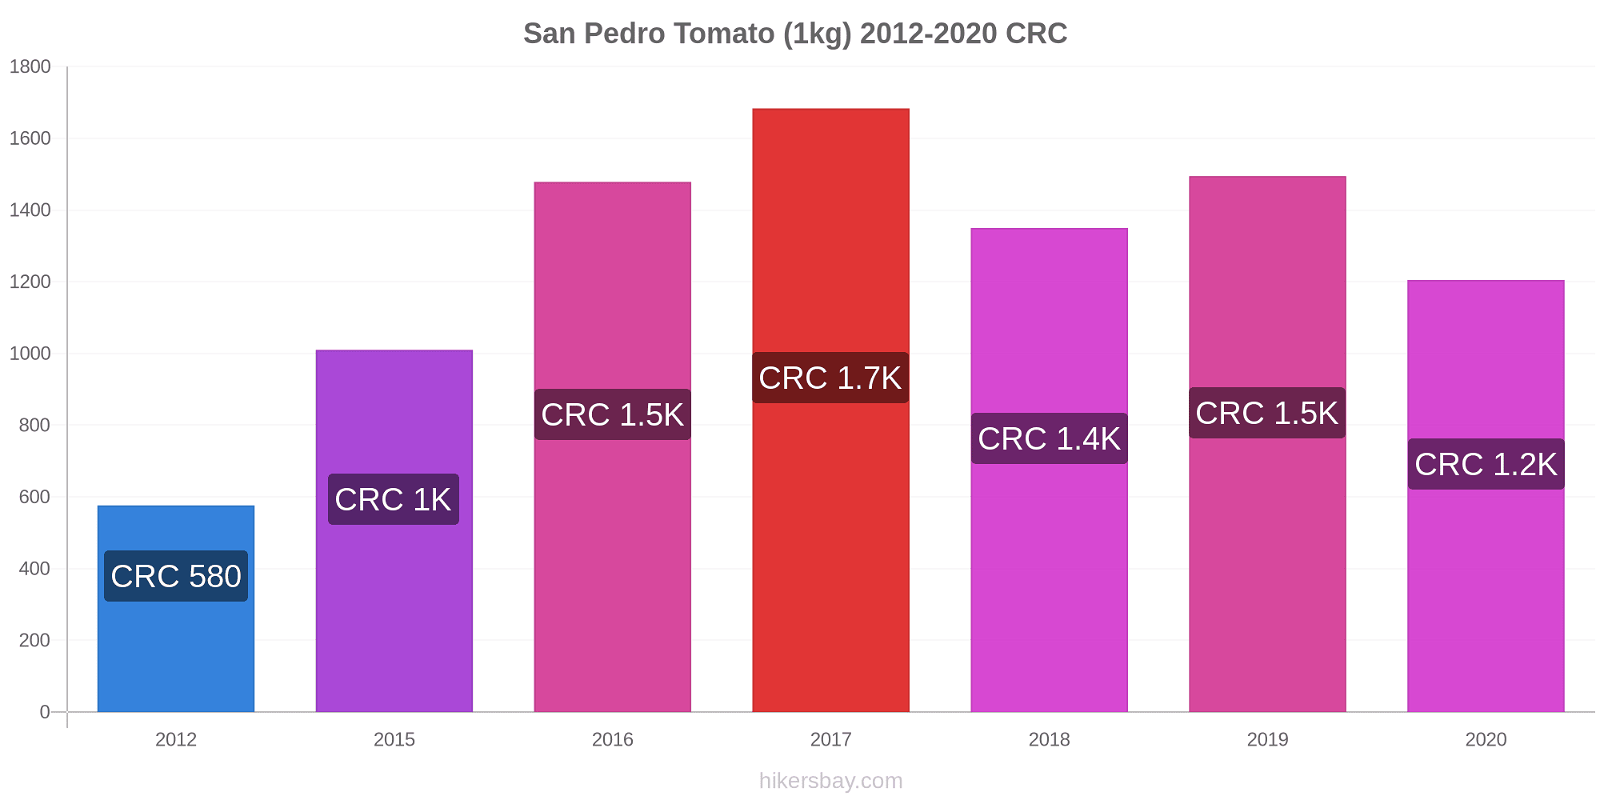 San Pedro price changes Tomato (1kg) hikersbay.com